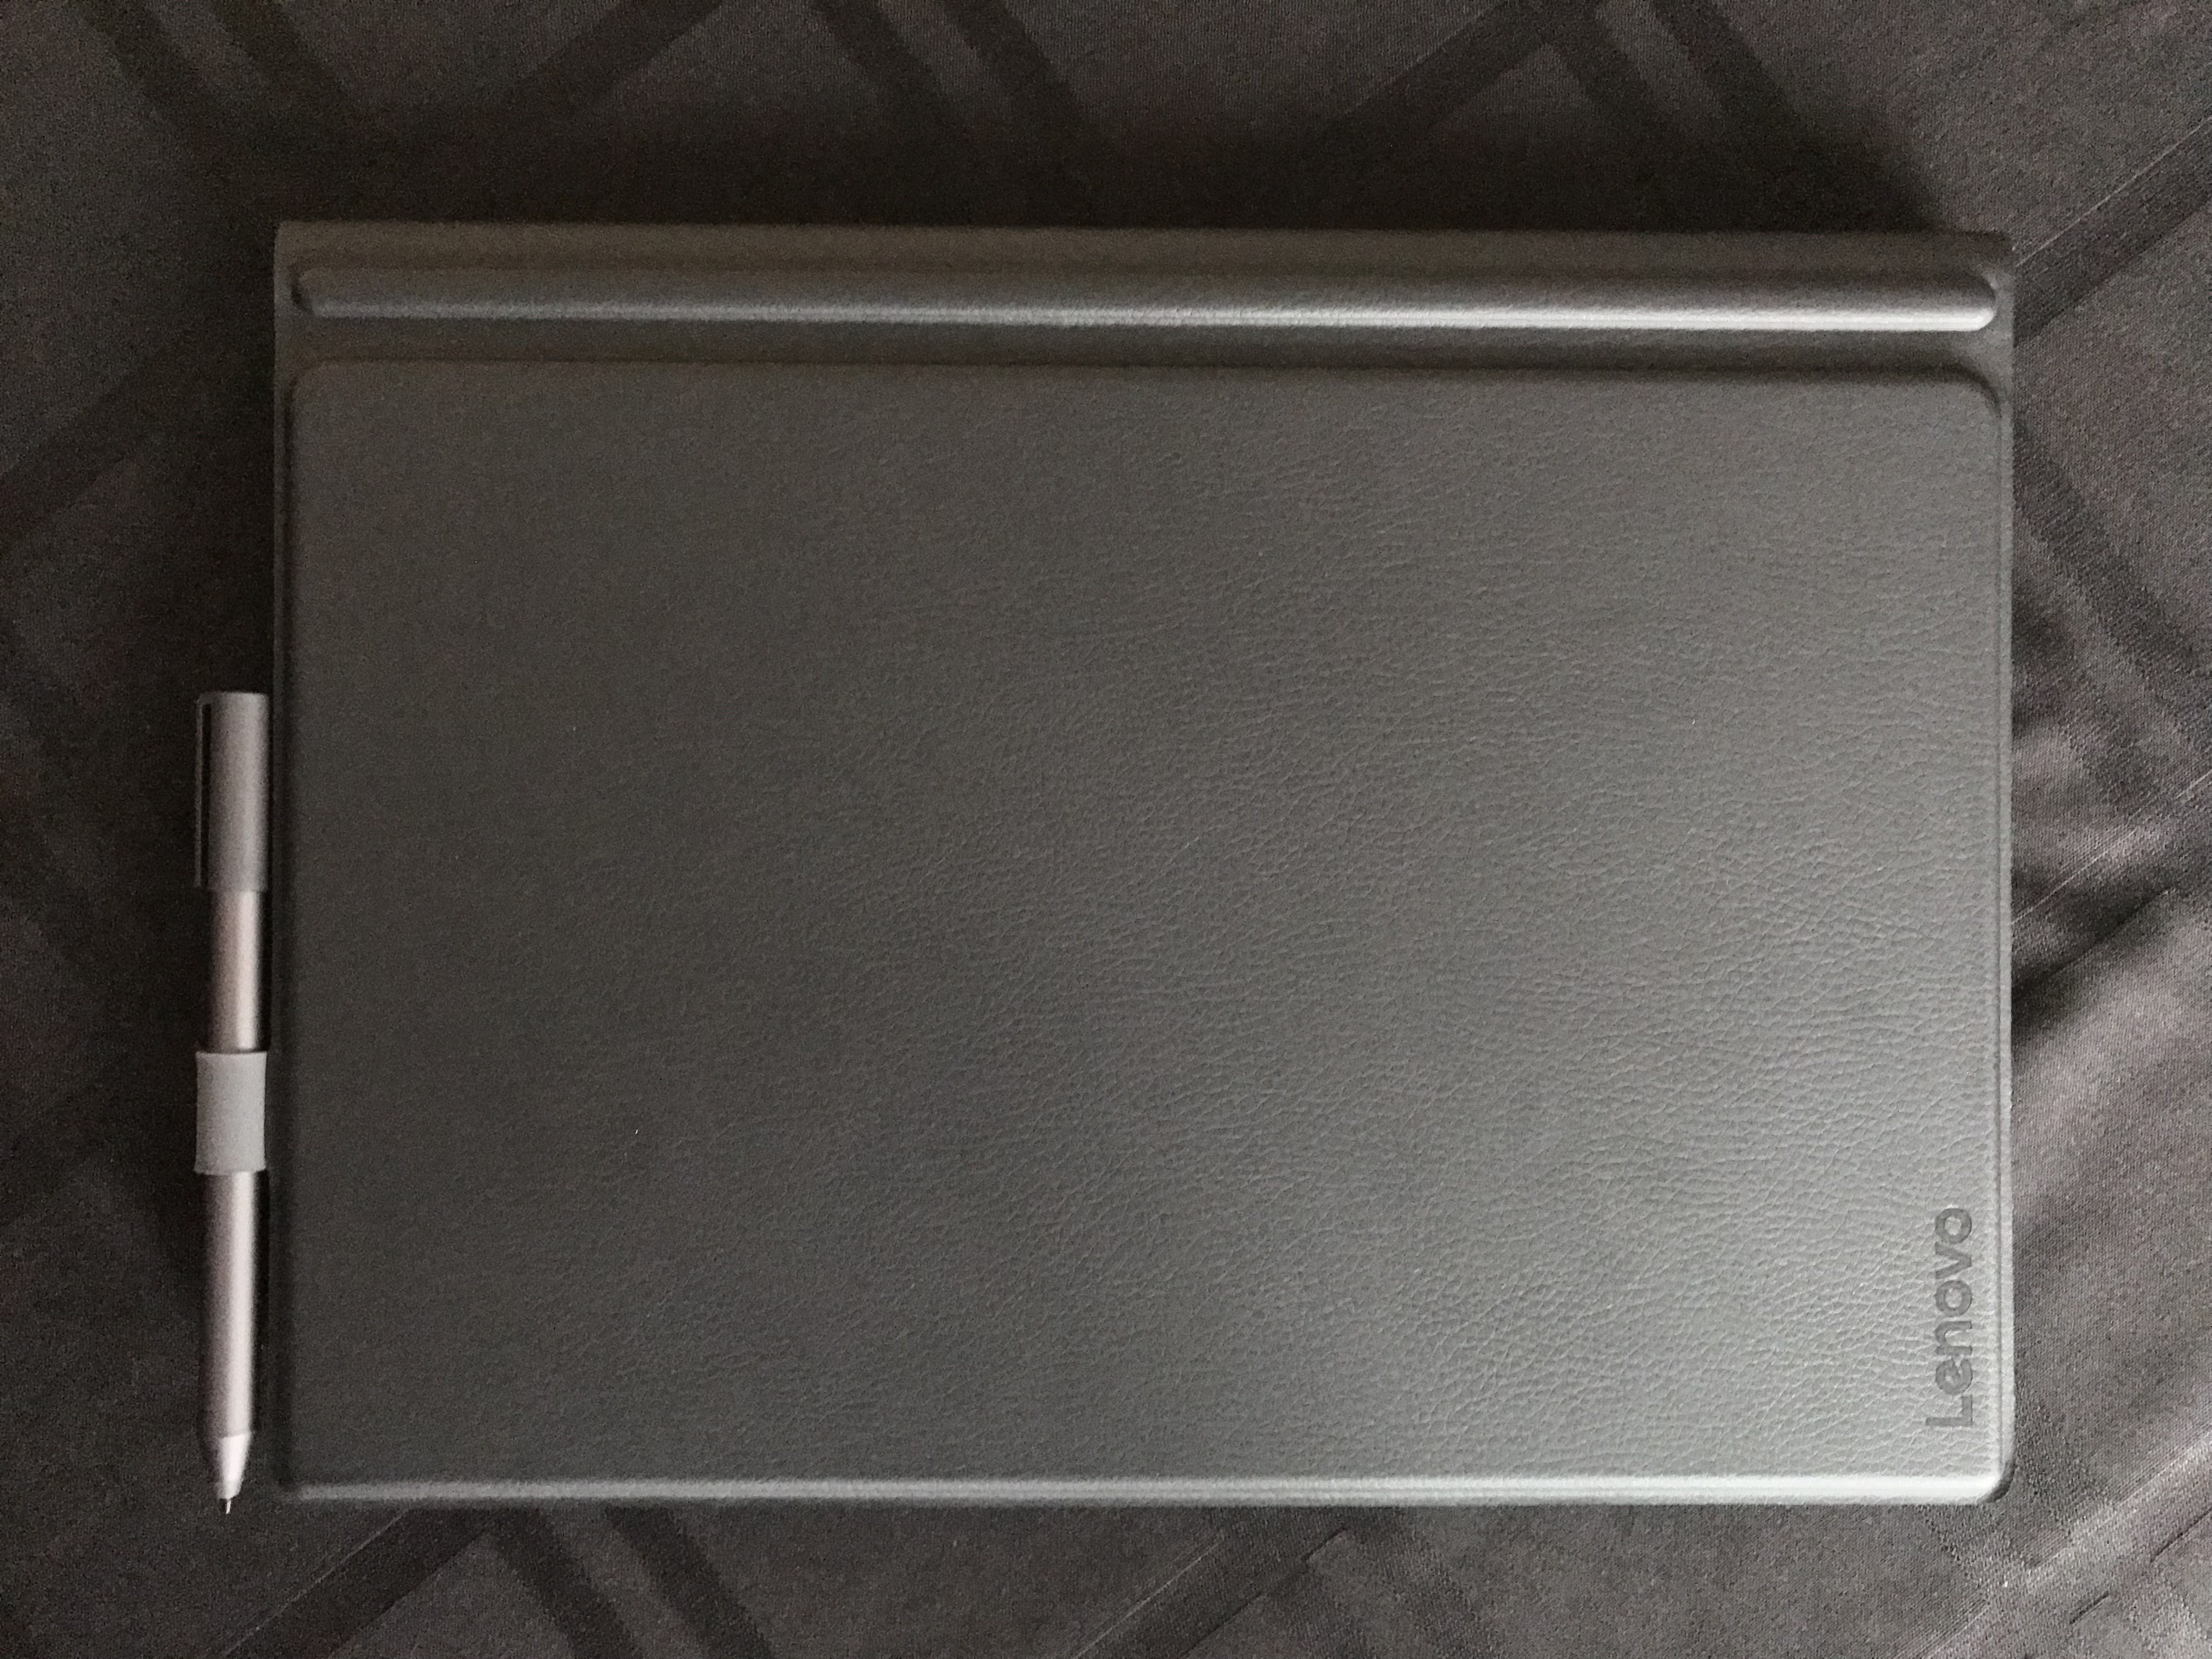 The Lenovo Miix 630 tablet